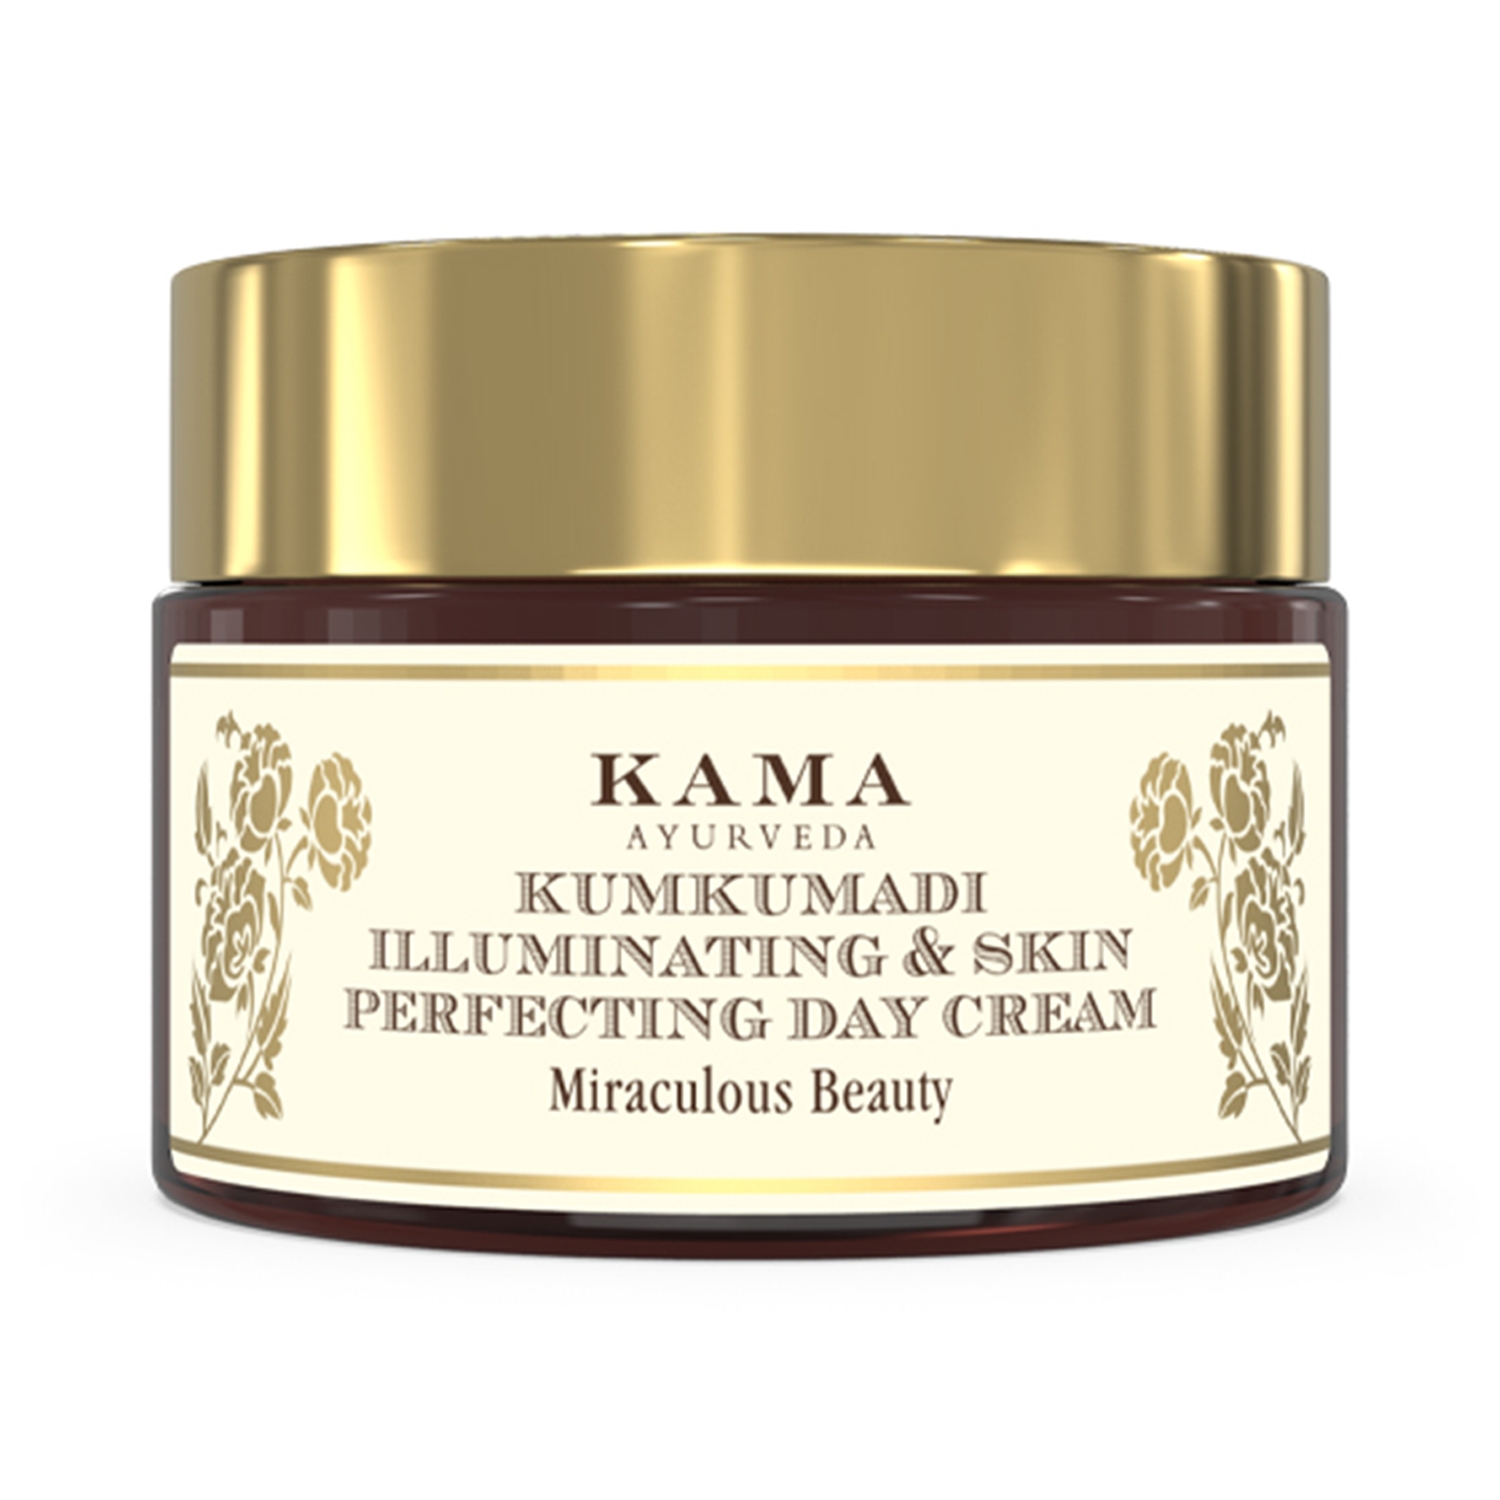 Kama Ayurveda | Kama Ayurveda Kumkumadi Illuminating & Skin Perfecting Day Cream (8g)